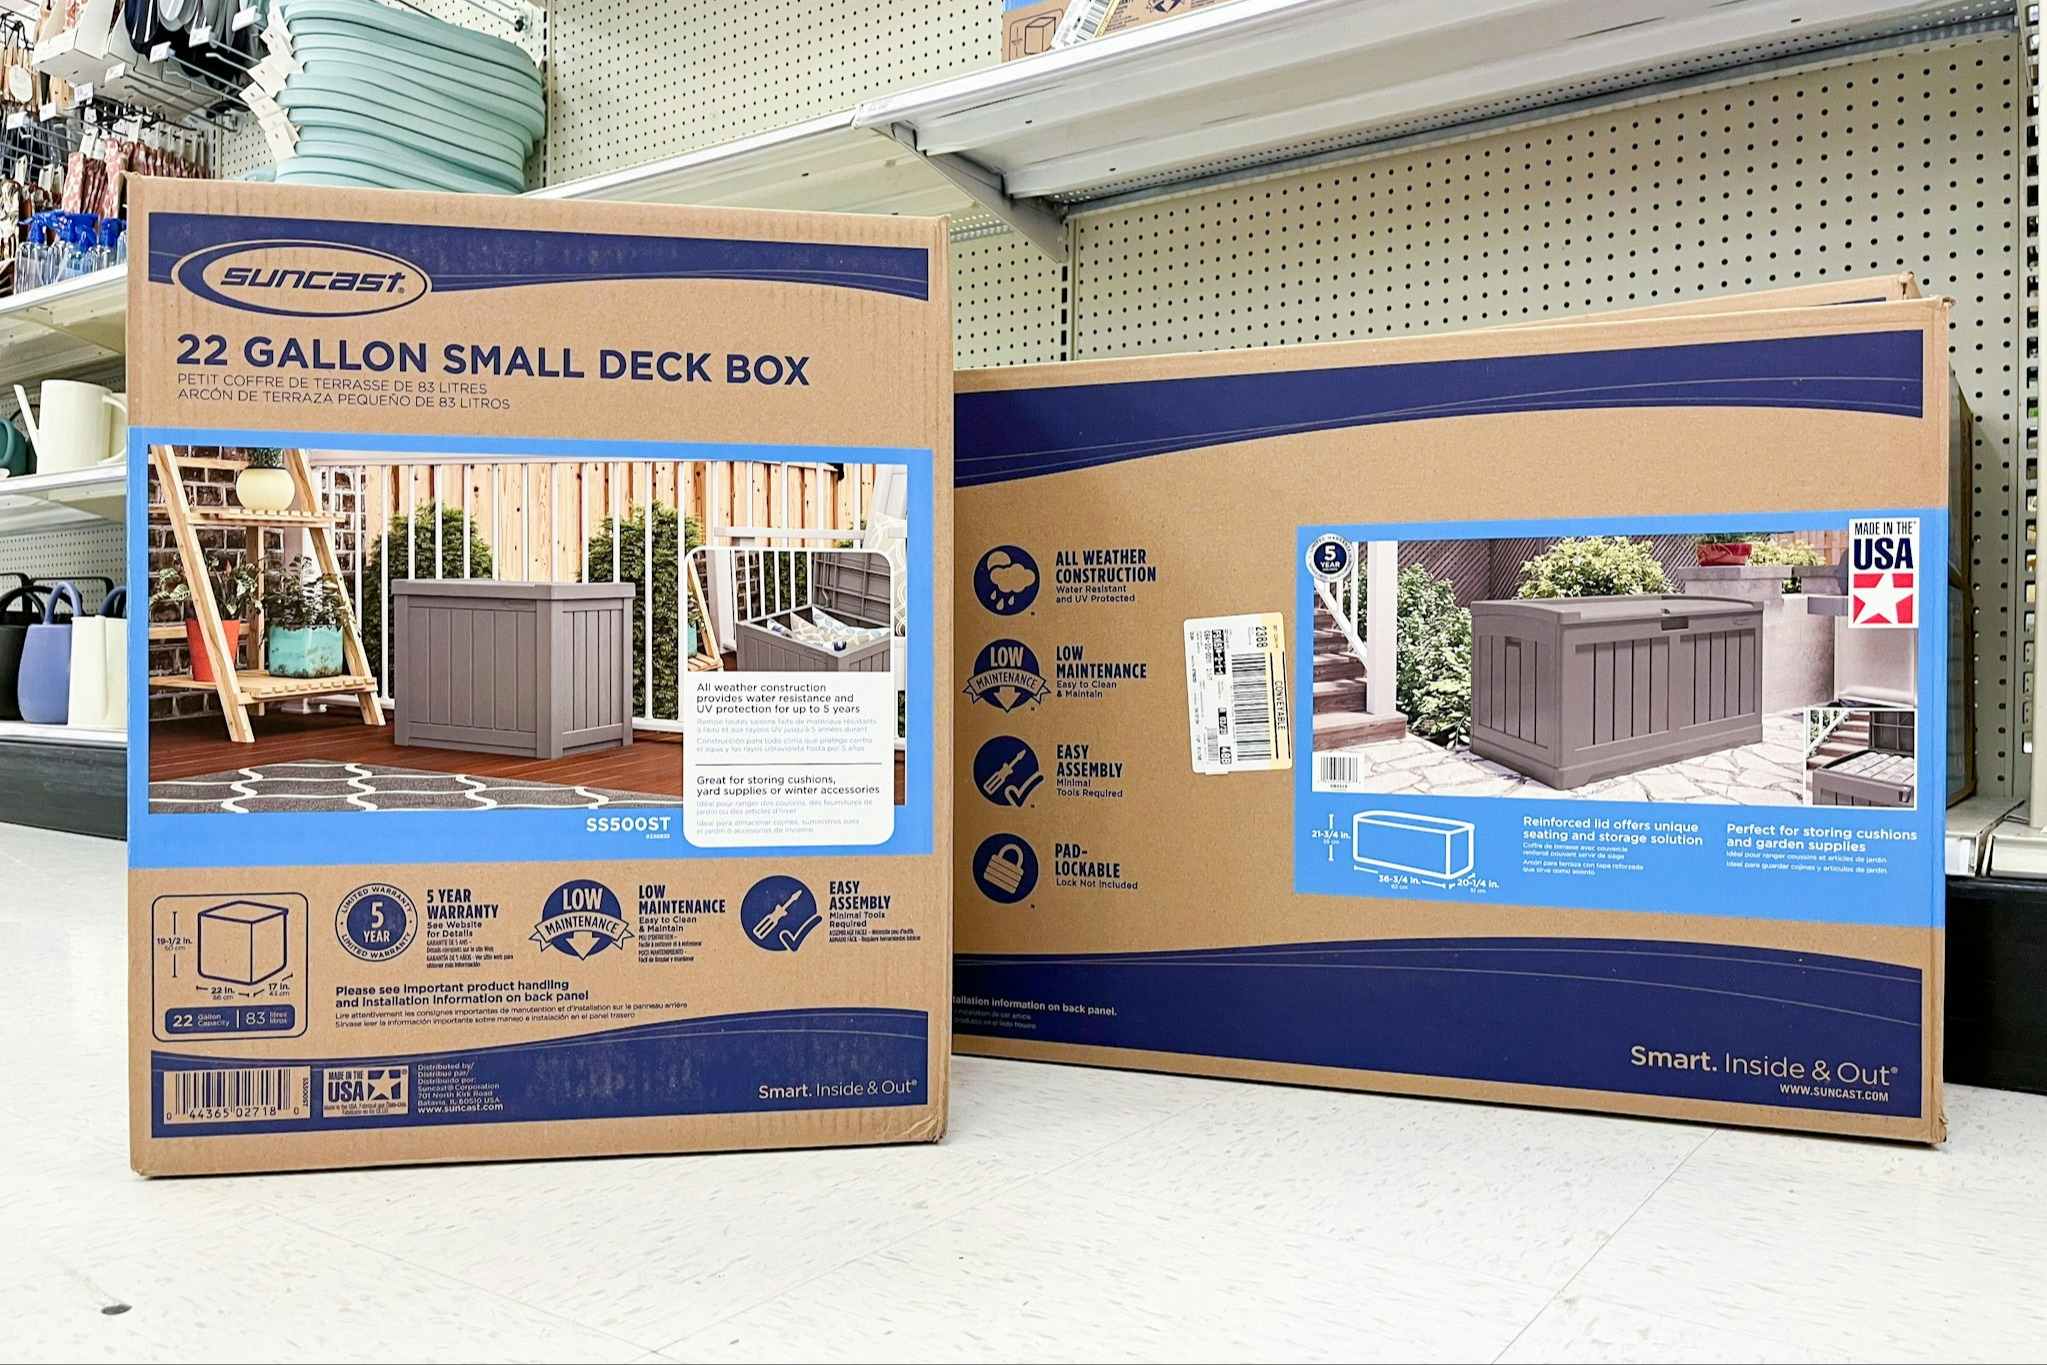 Deck Storage Boxes on Sale: Starting at $35.91 at Target